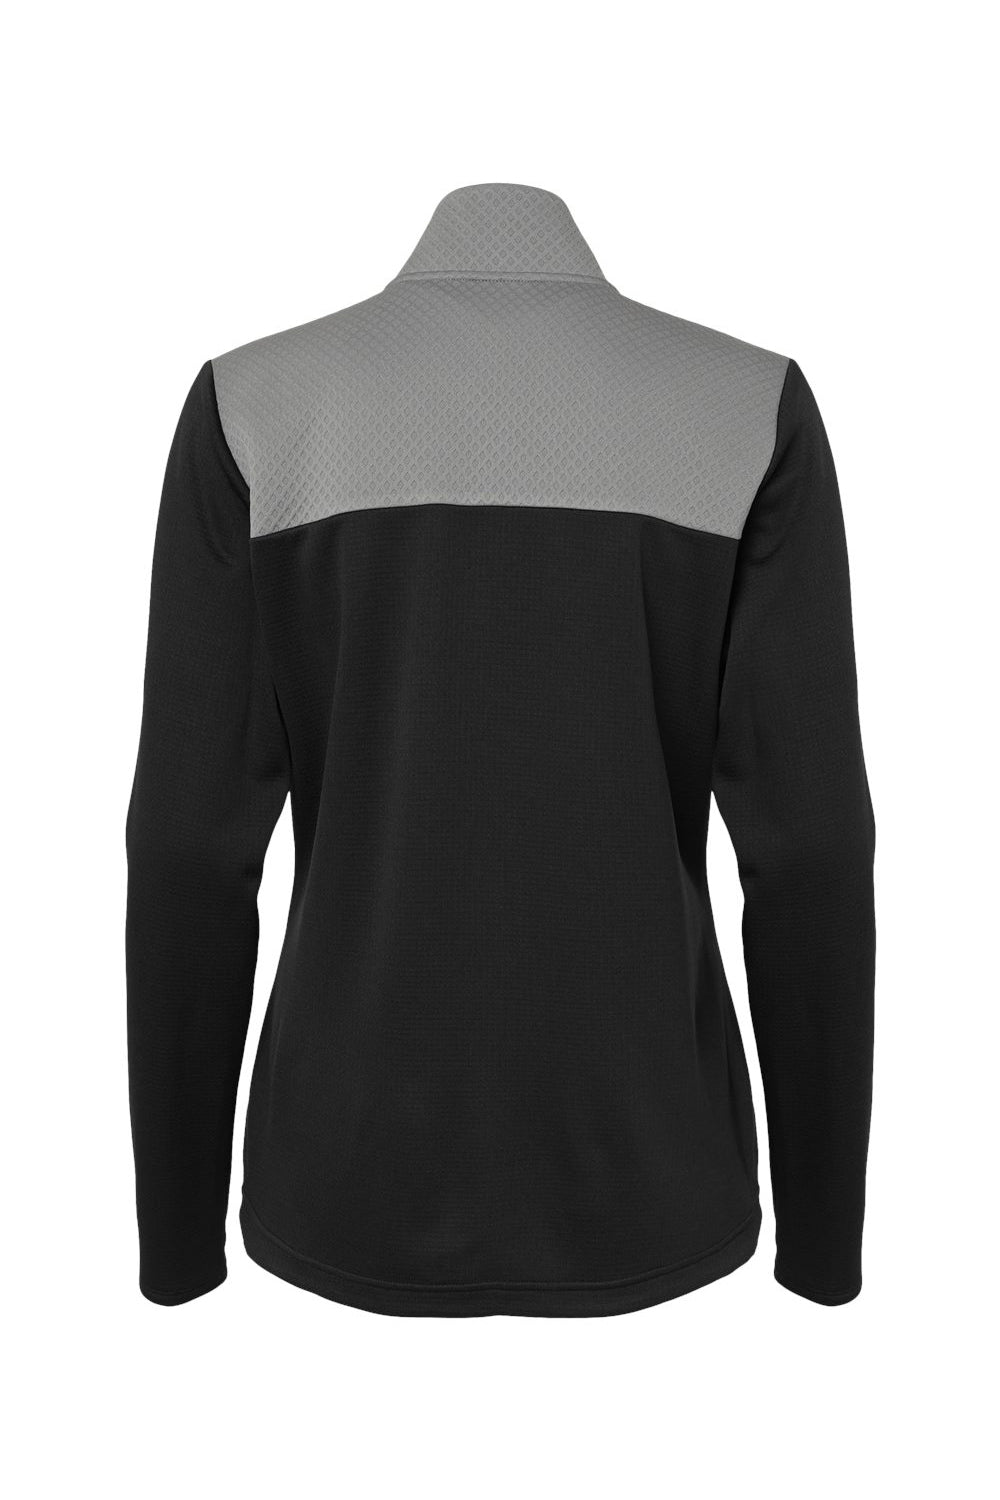 Adidas A529 Womens Textured Mixed Media Full Zip Jacket Black/Grey Flat Back